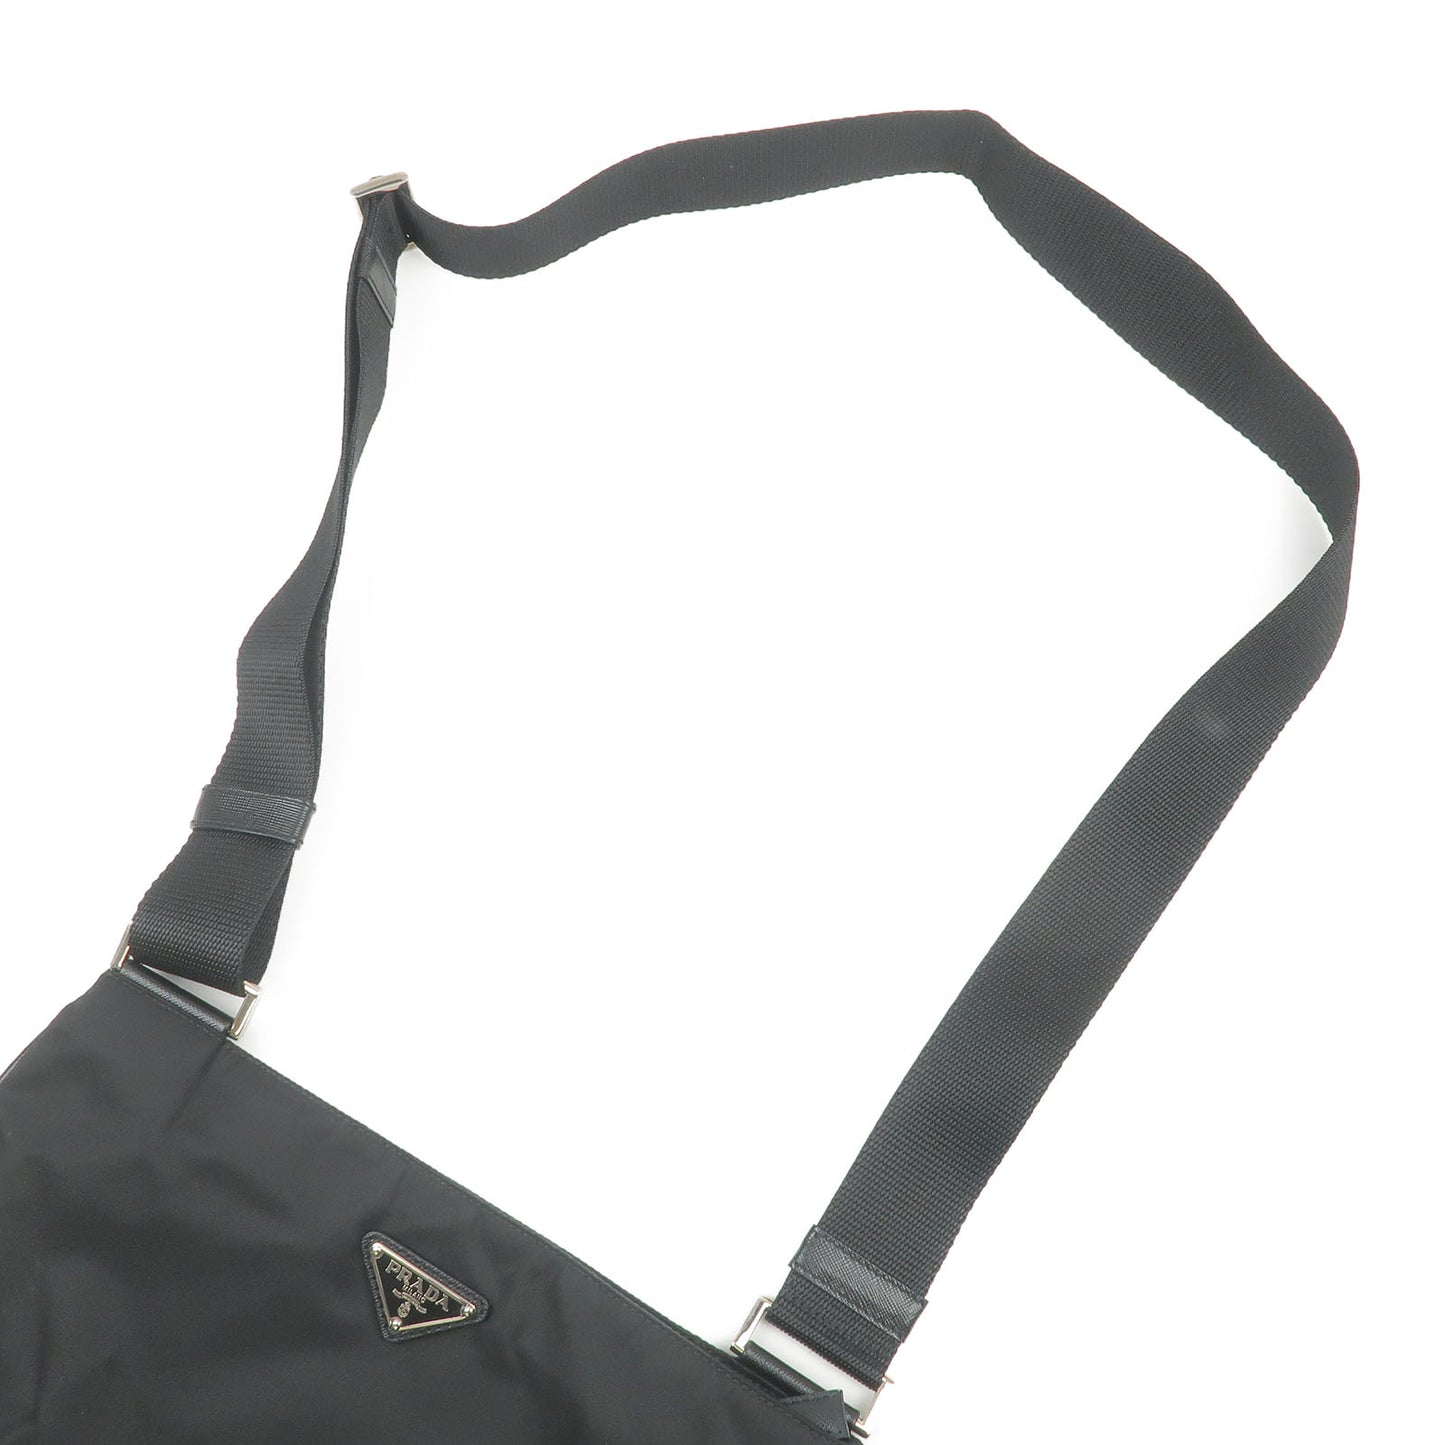 PRADA Nylon Leather Shoulder Bag NERO Black VA0053